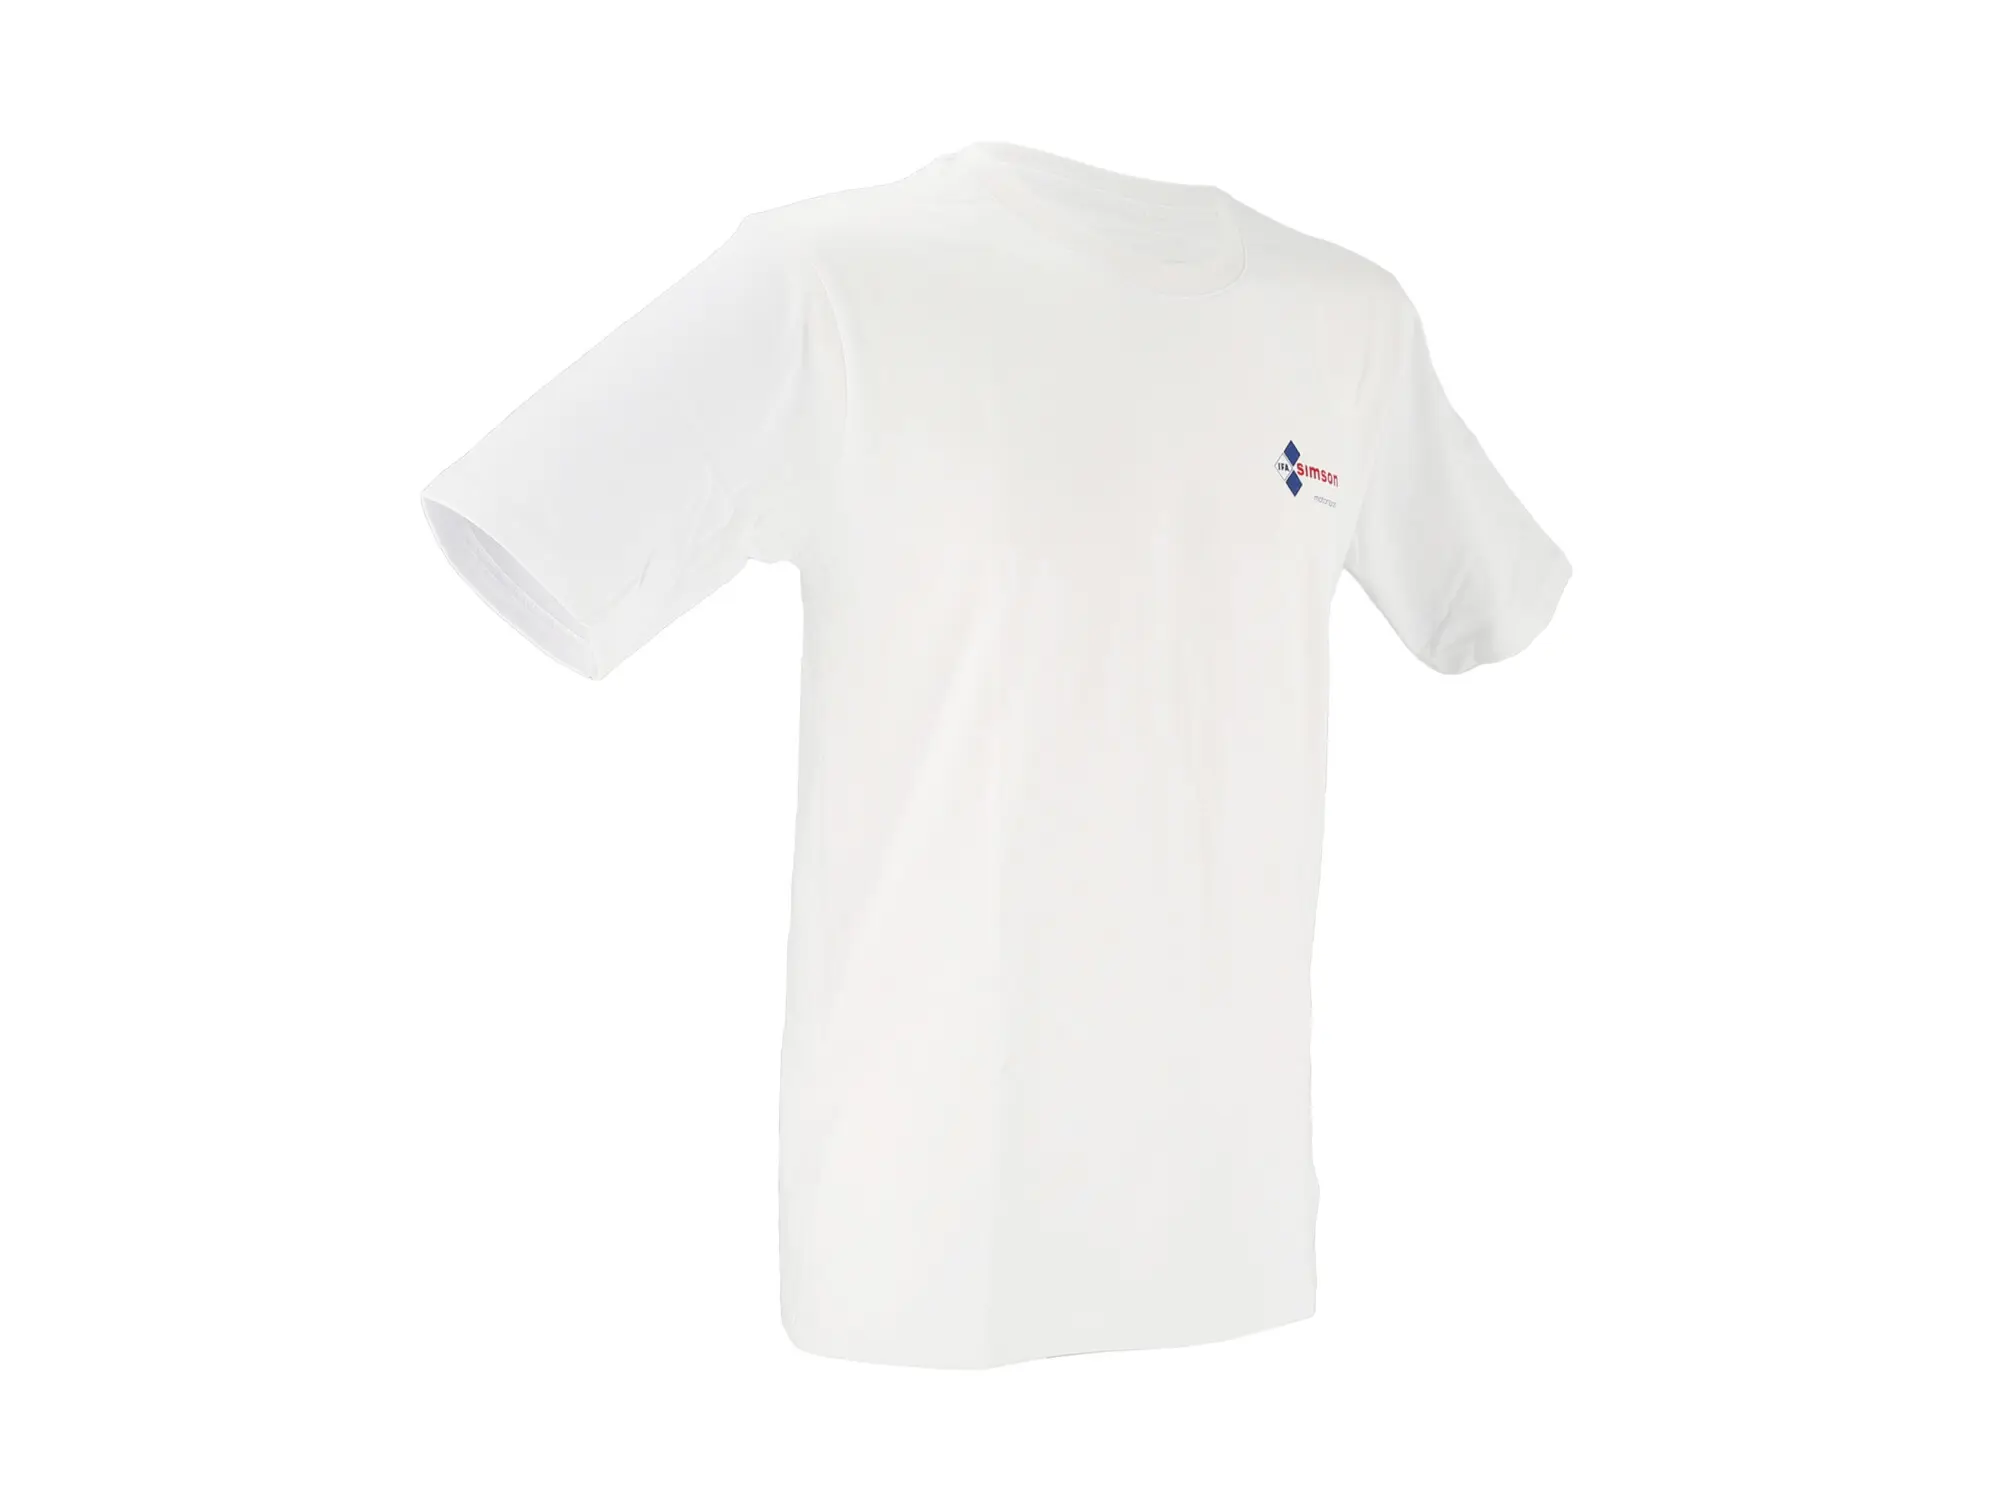 T-Shirt "SIMSON Motorsport" - Weiß, Art.-Nr.: 10072500 - Bild 1